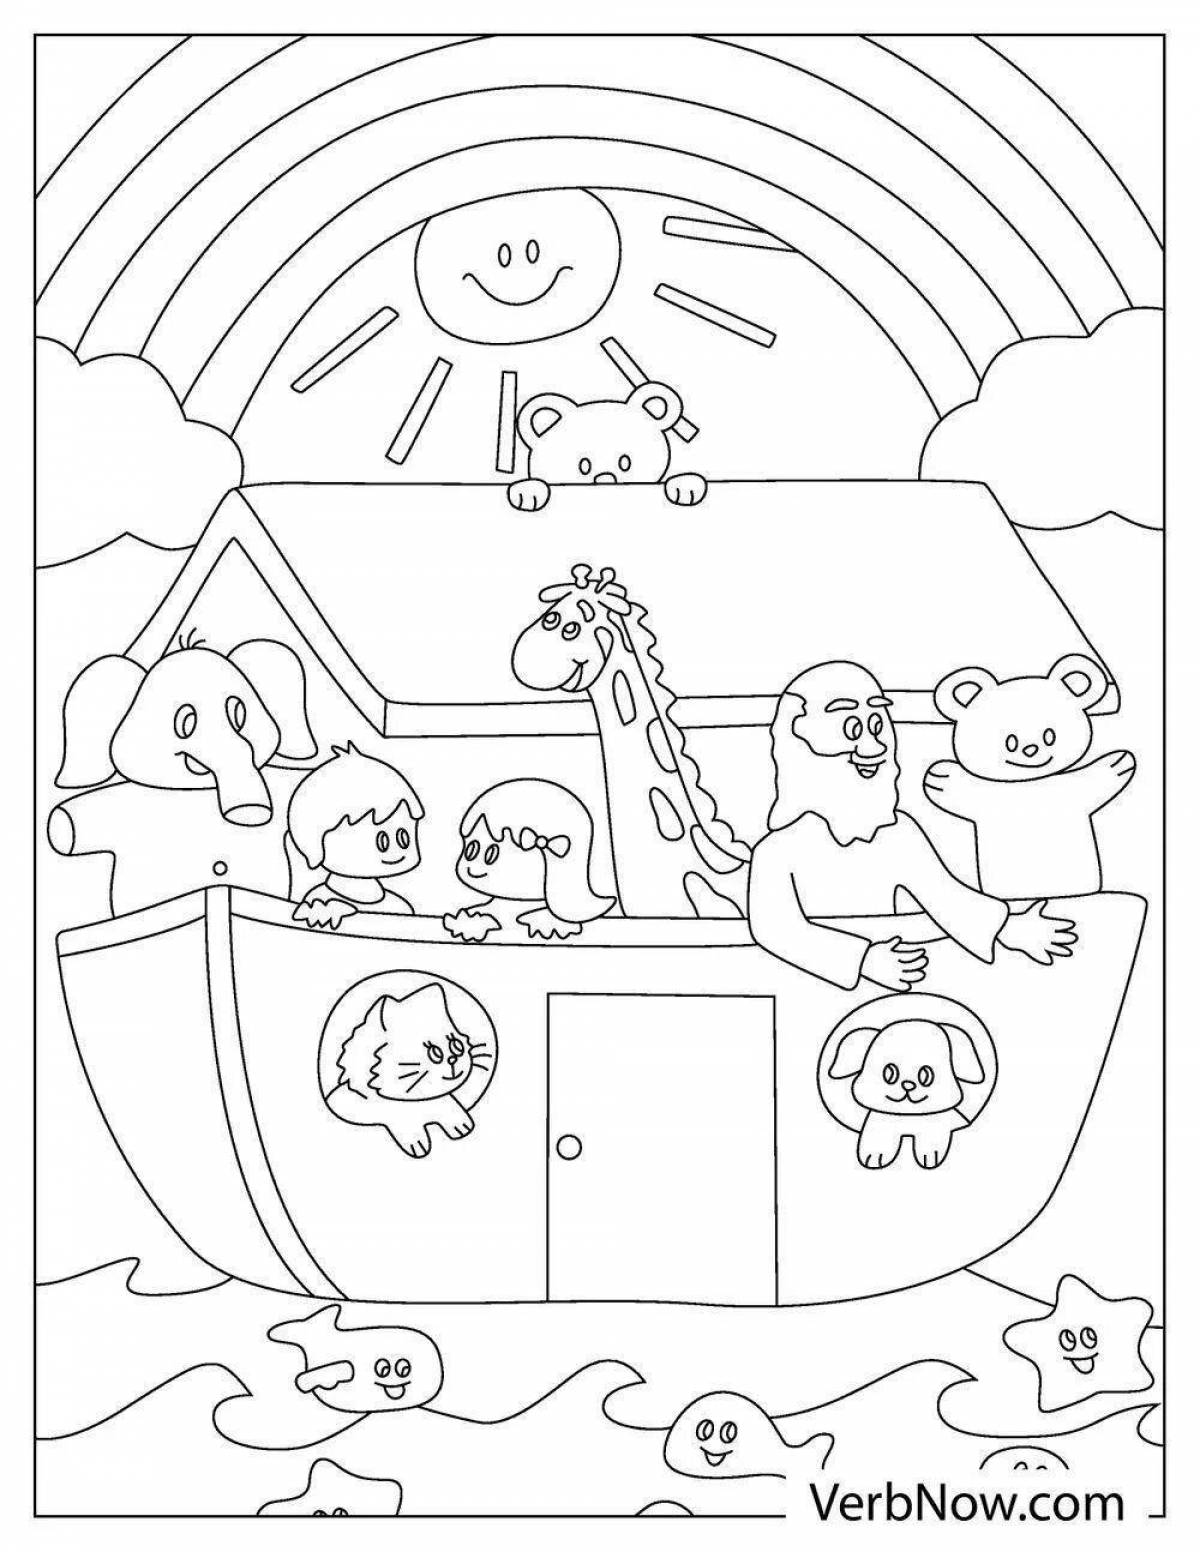 Coloring Noah's Ark for kids